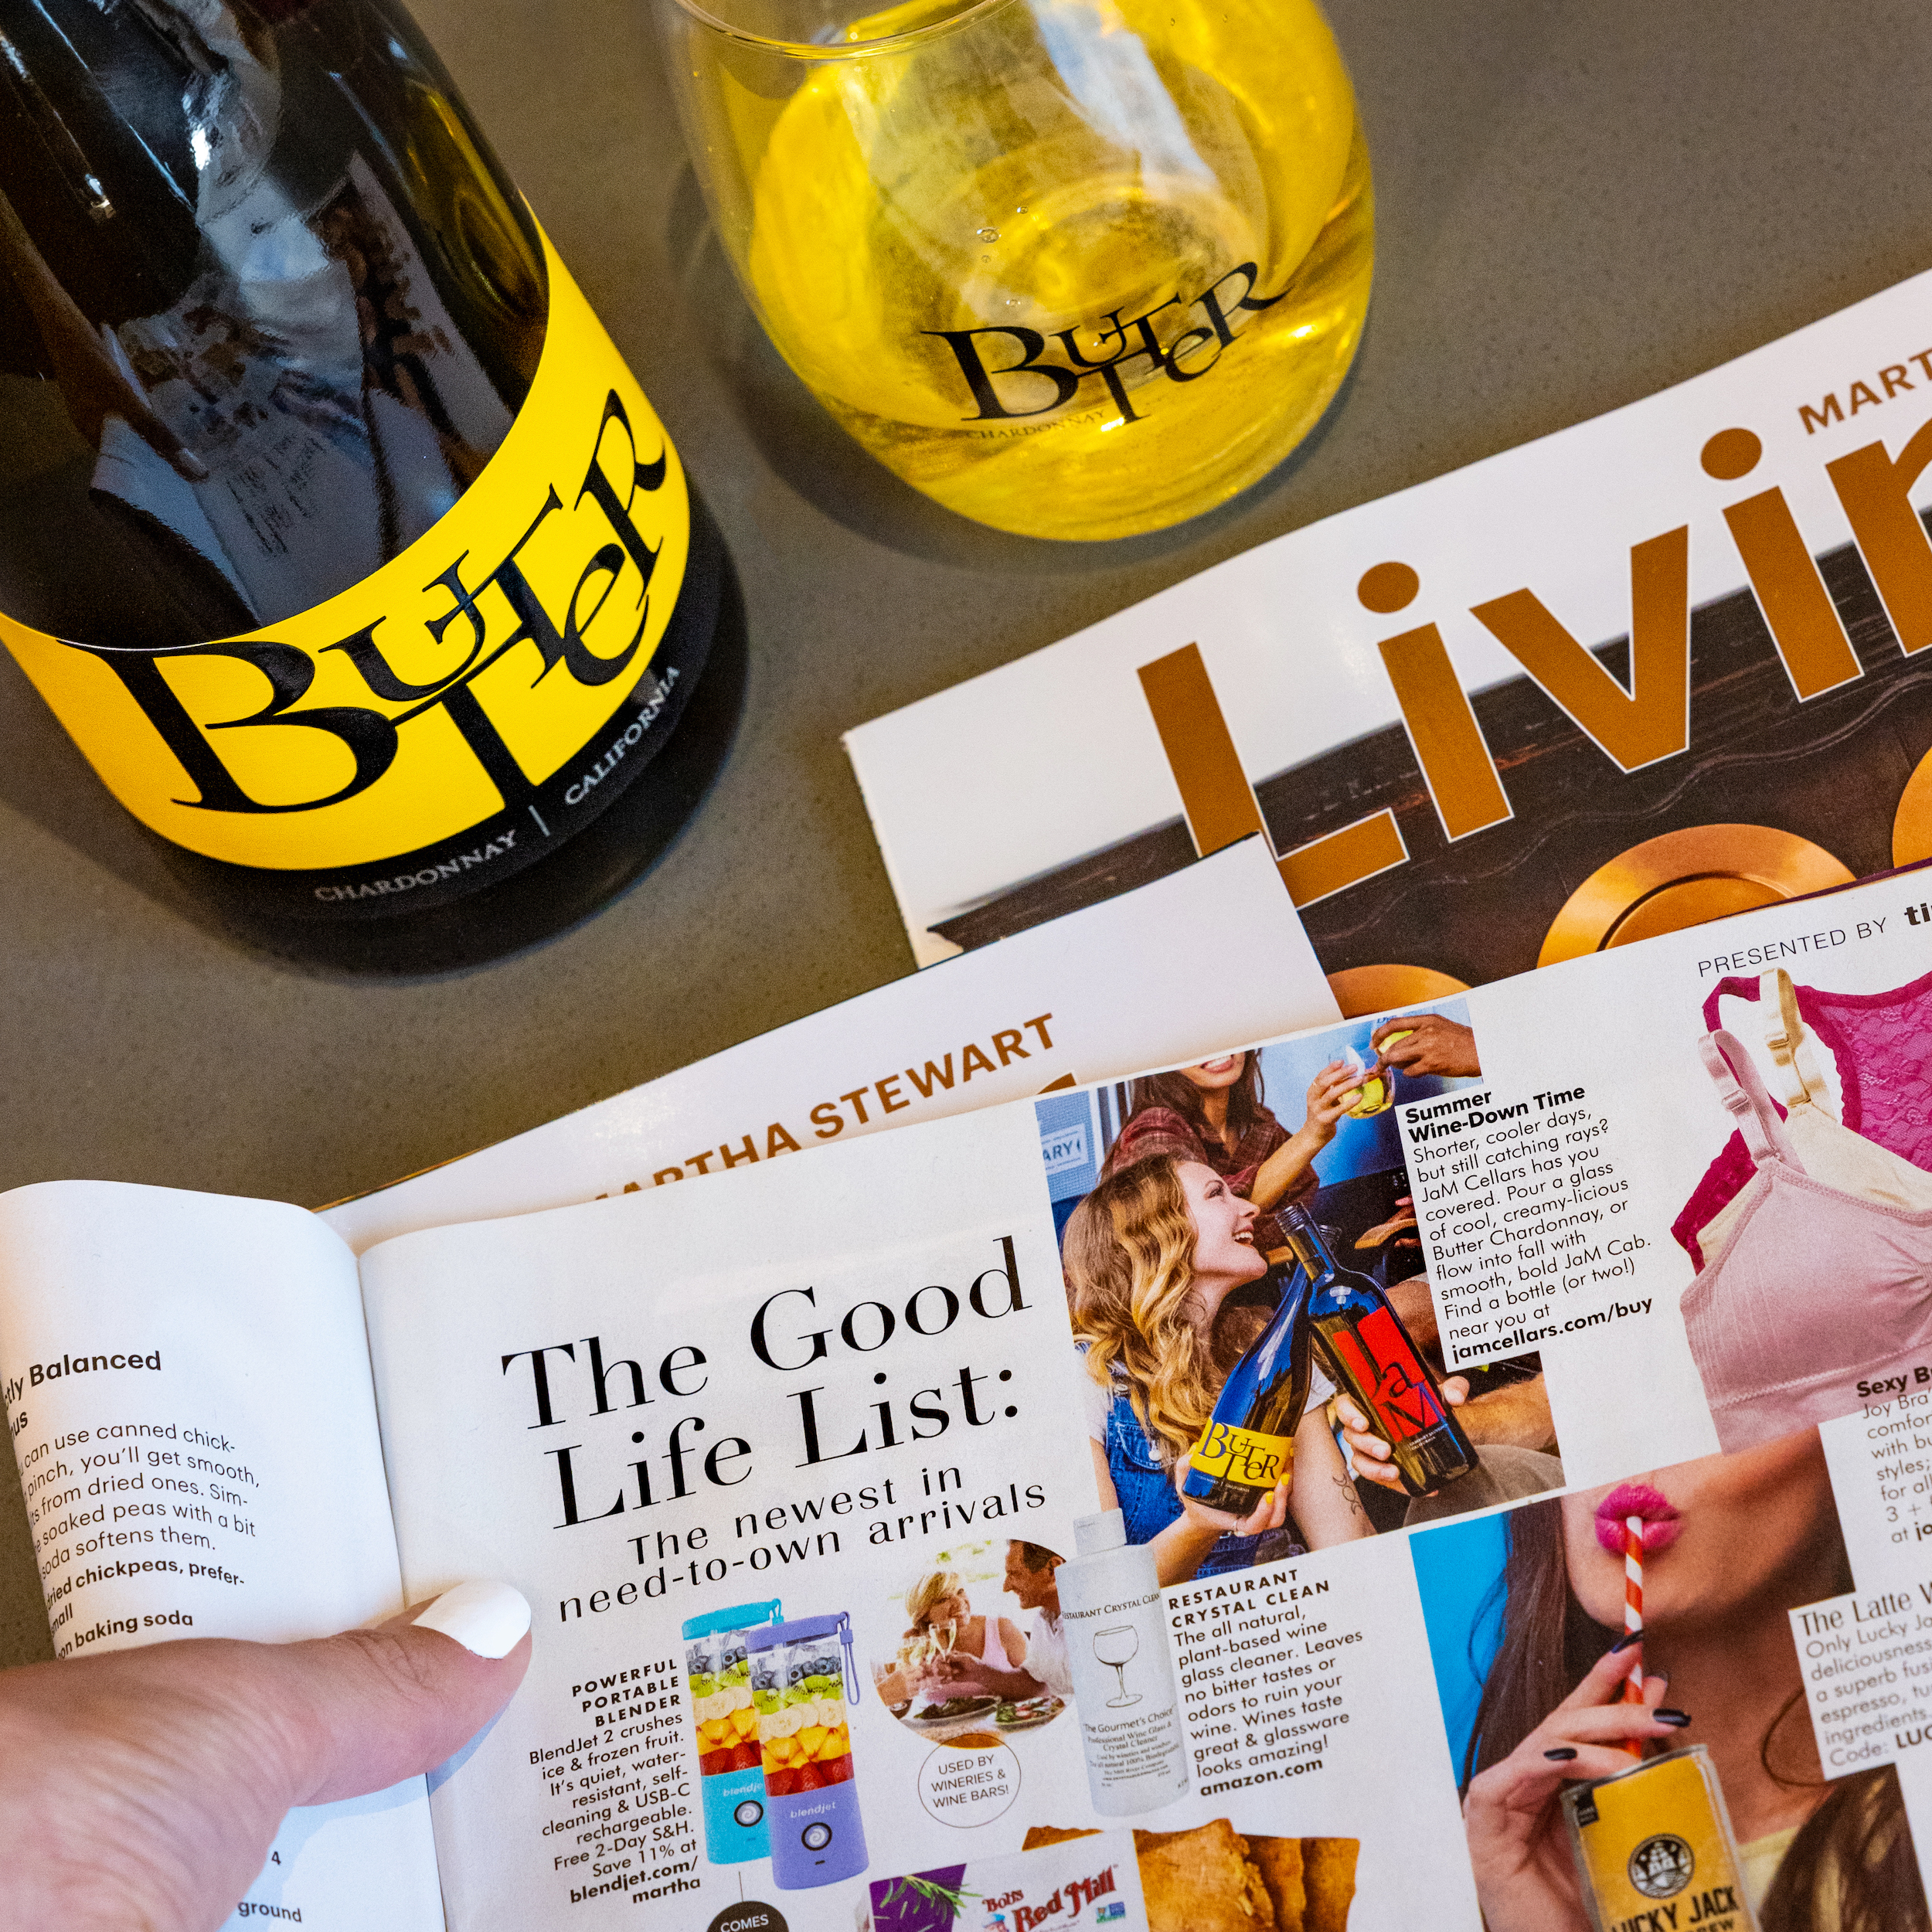 Butter Chardonnay and JaM Cab make the Martha Stewart Living Good Life List